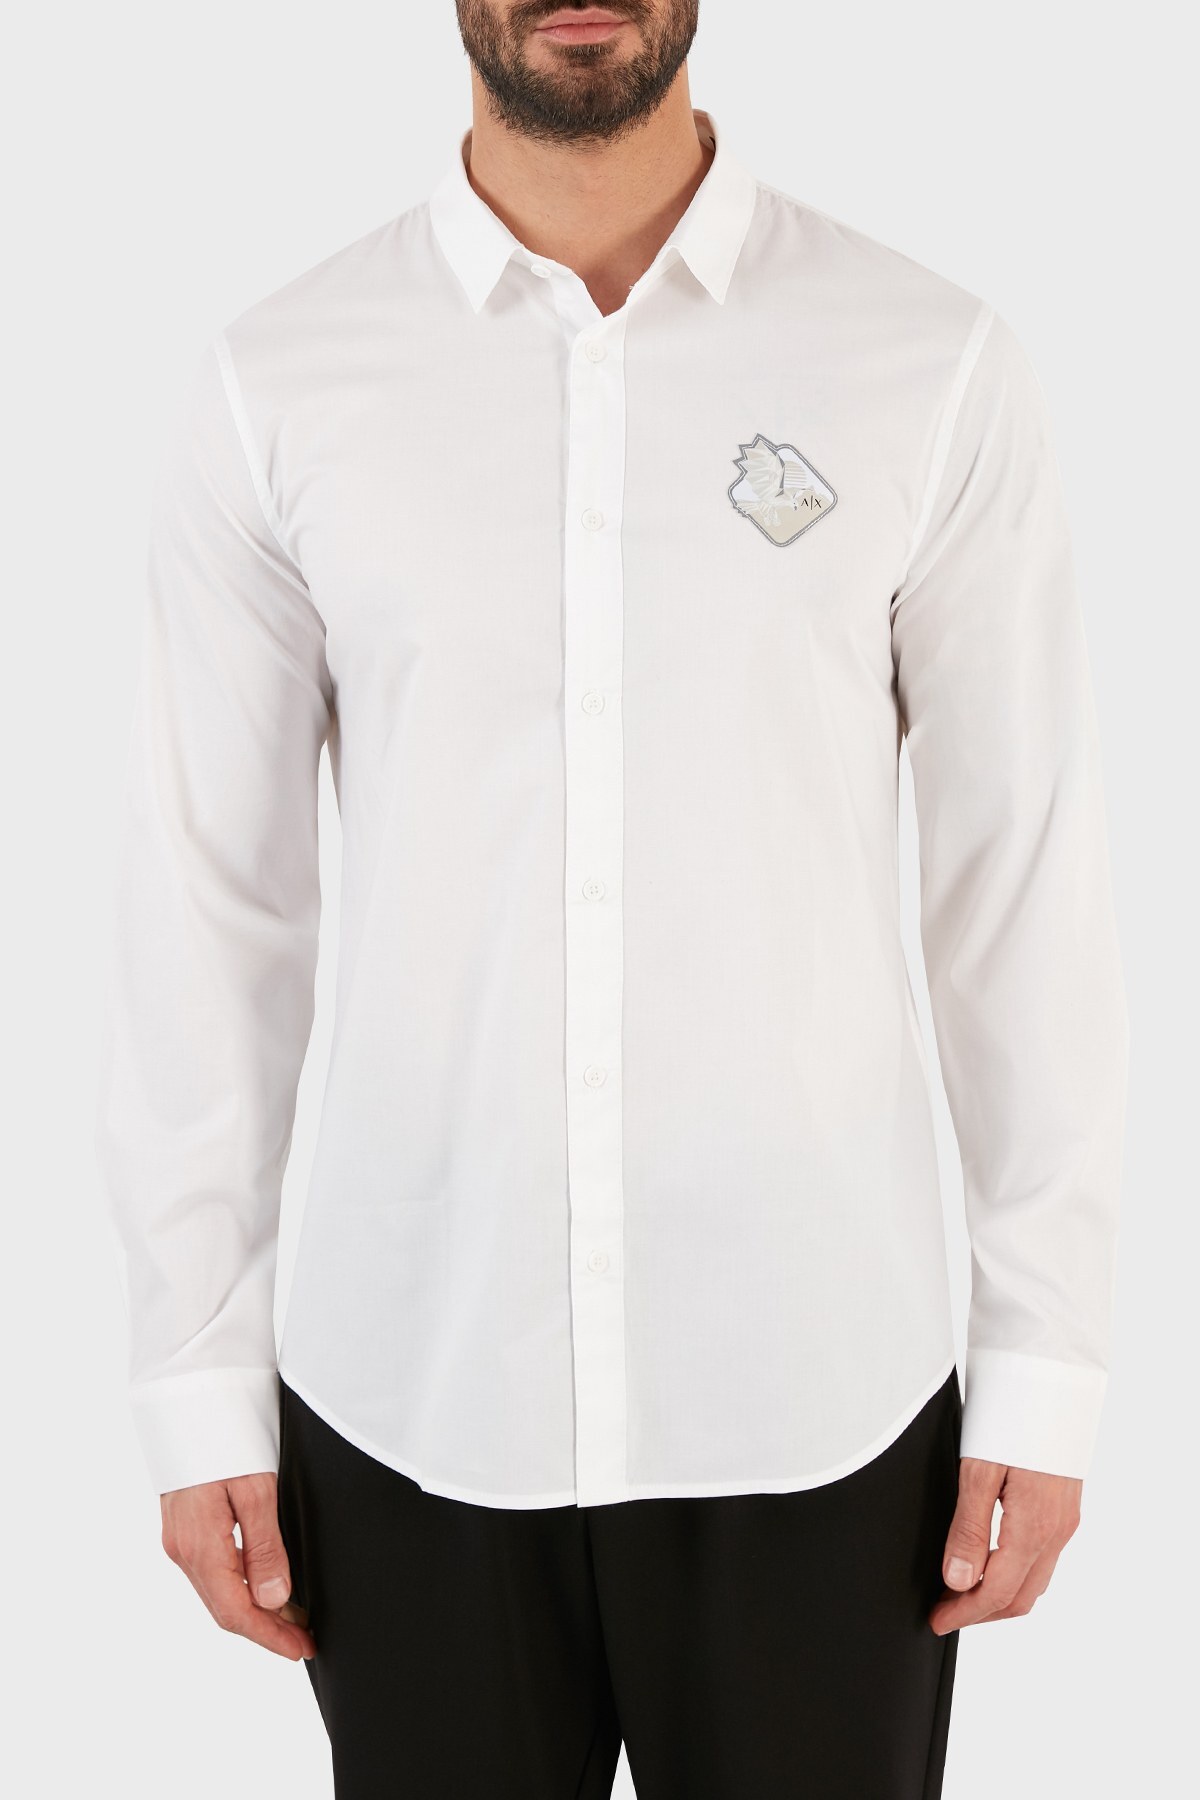 Armani Exchange Shirts for Men | Exxe Selection